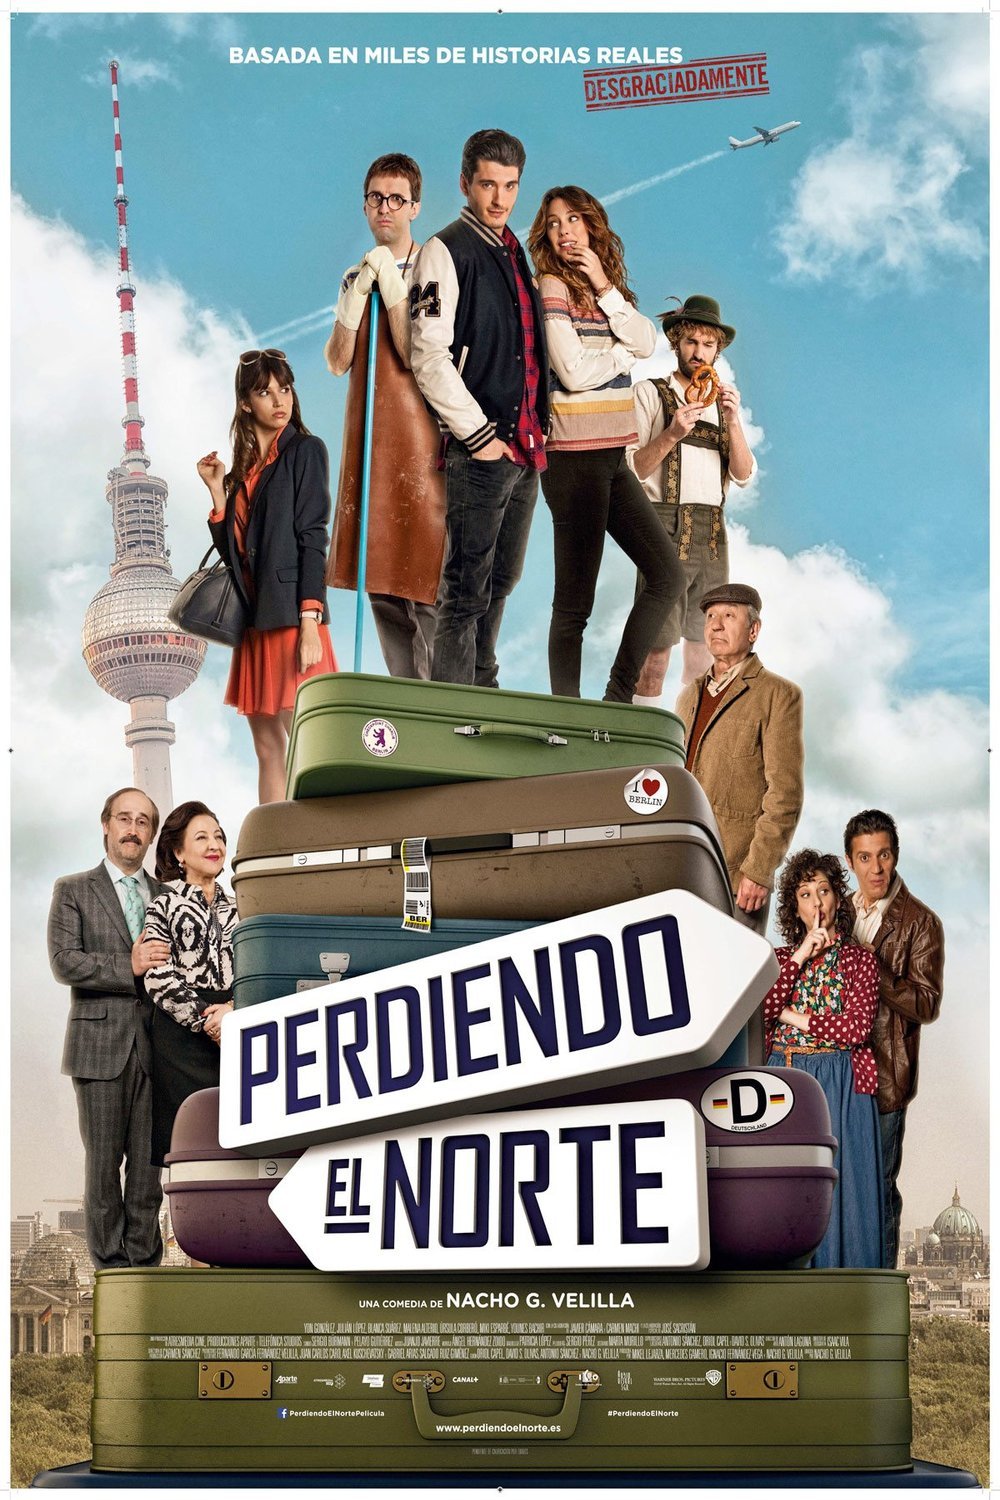 Spanish poster of the movie Perdiendo el norte